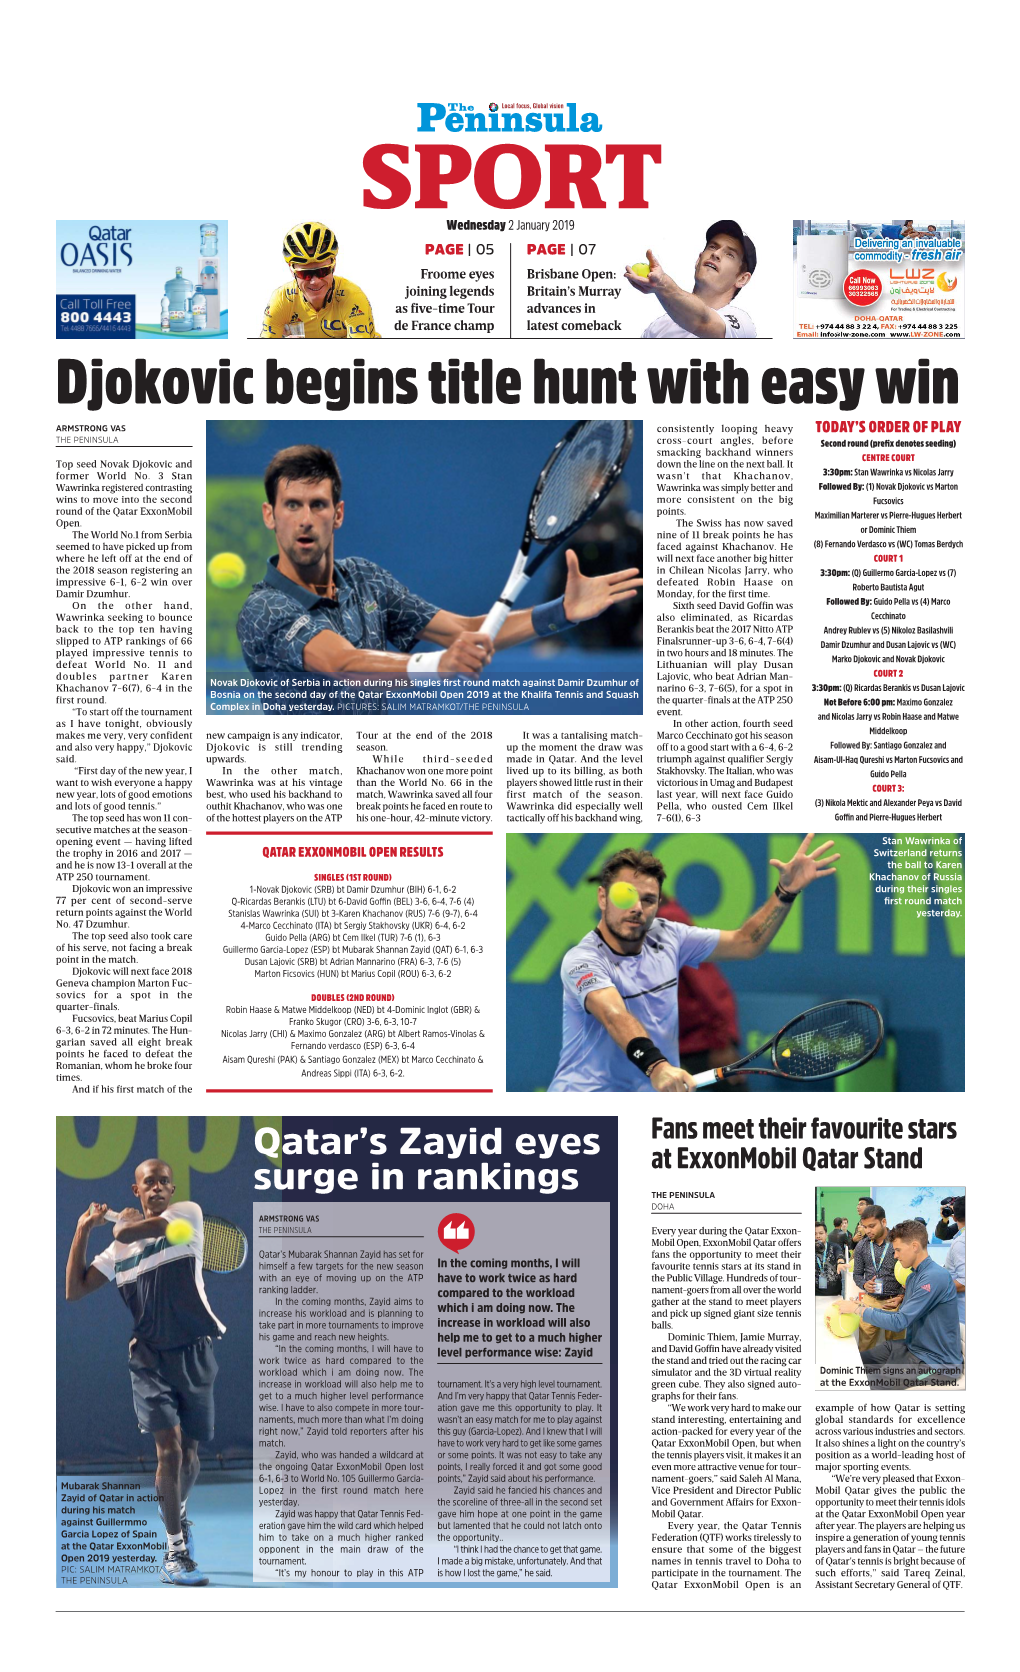 Djokovic Begins Title Hunt with Easy Win